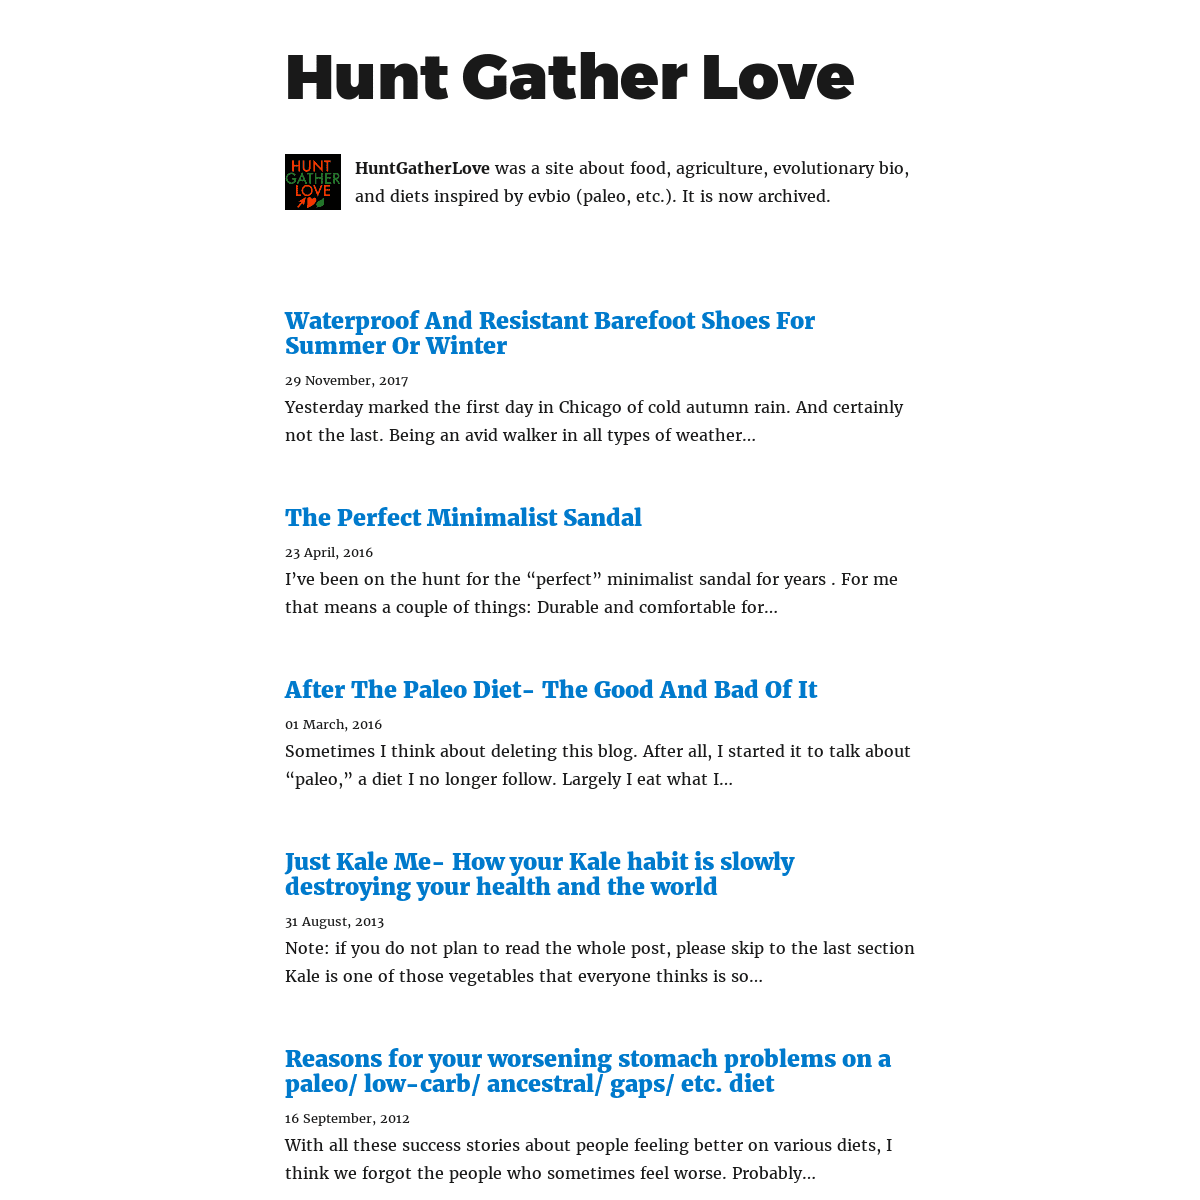 A complete backup of https://huntgatherlove.com